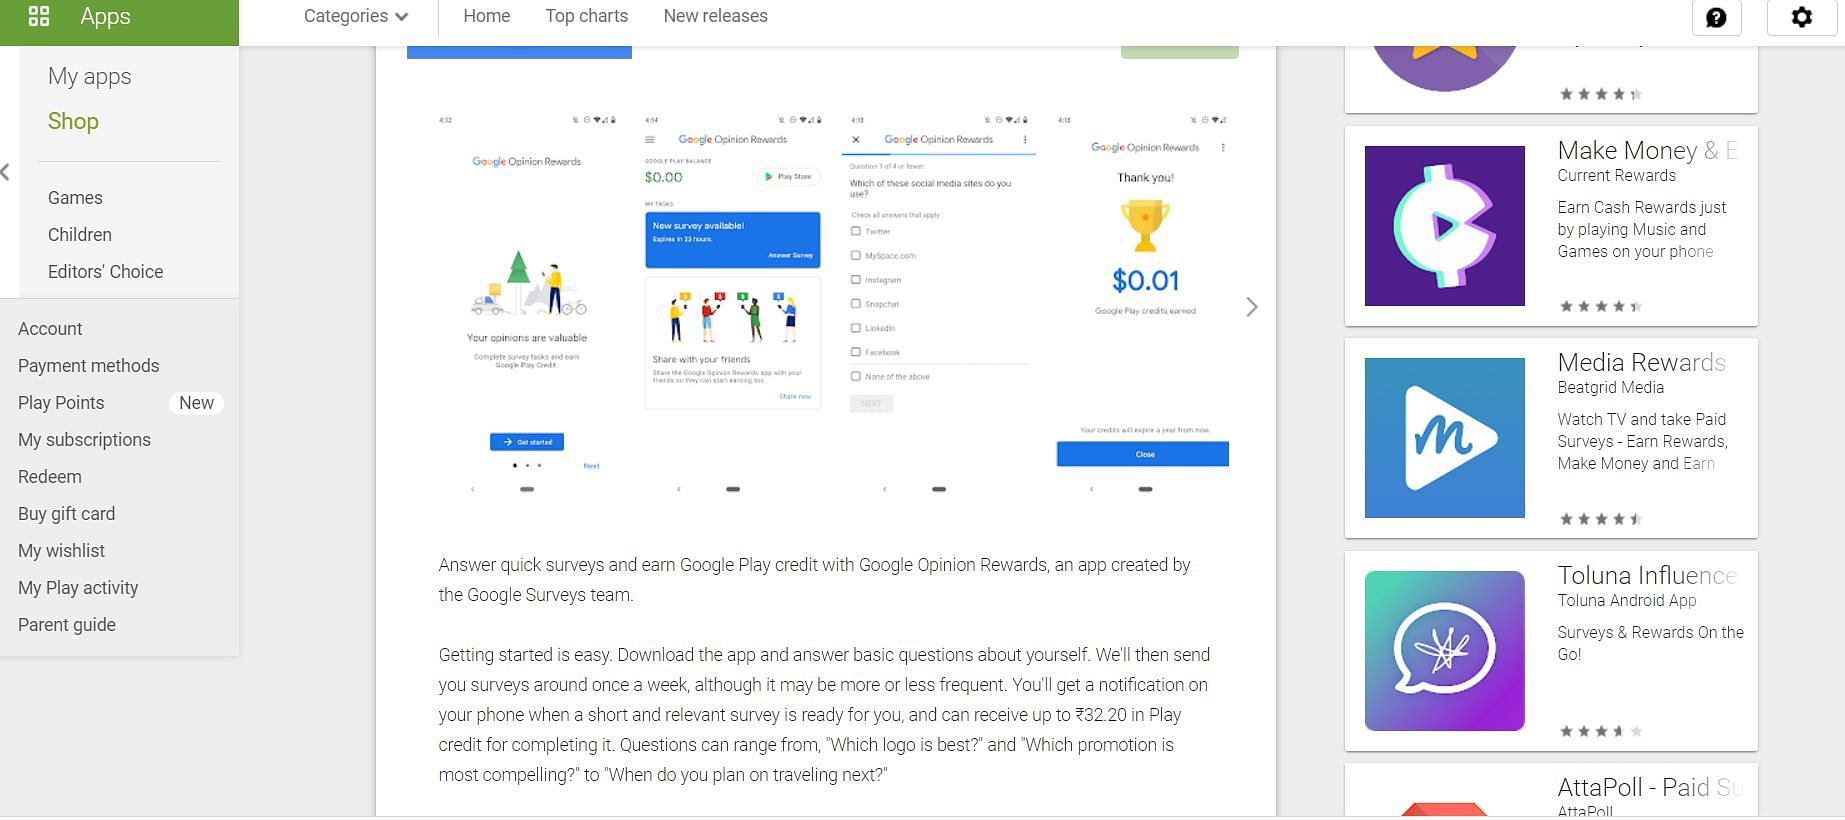 Google Opinion Rewards awards free Play Store money after each survey (Image via Google Play)